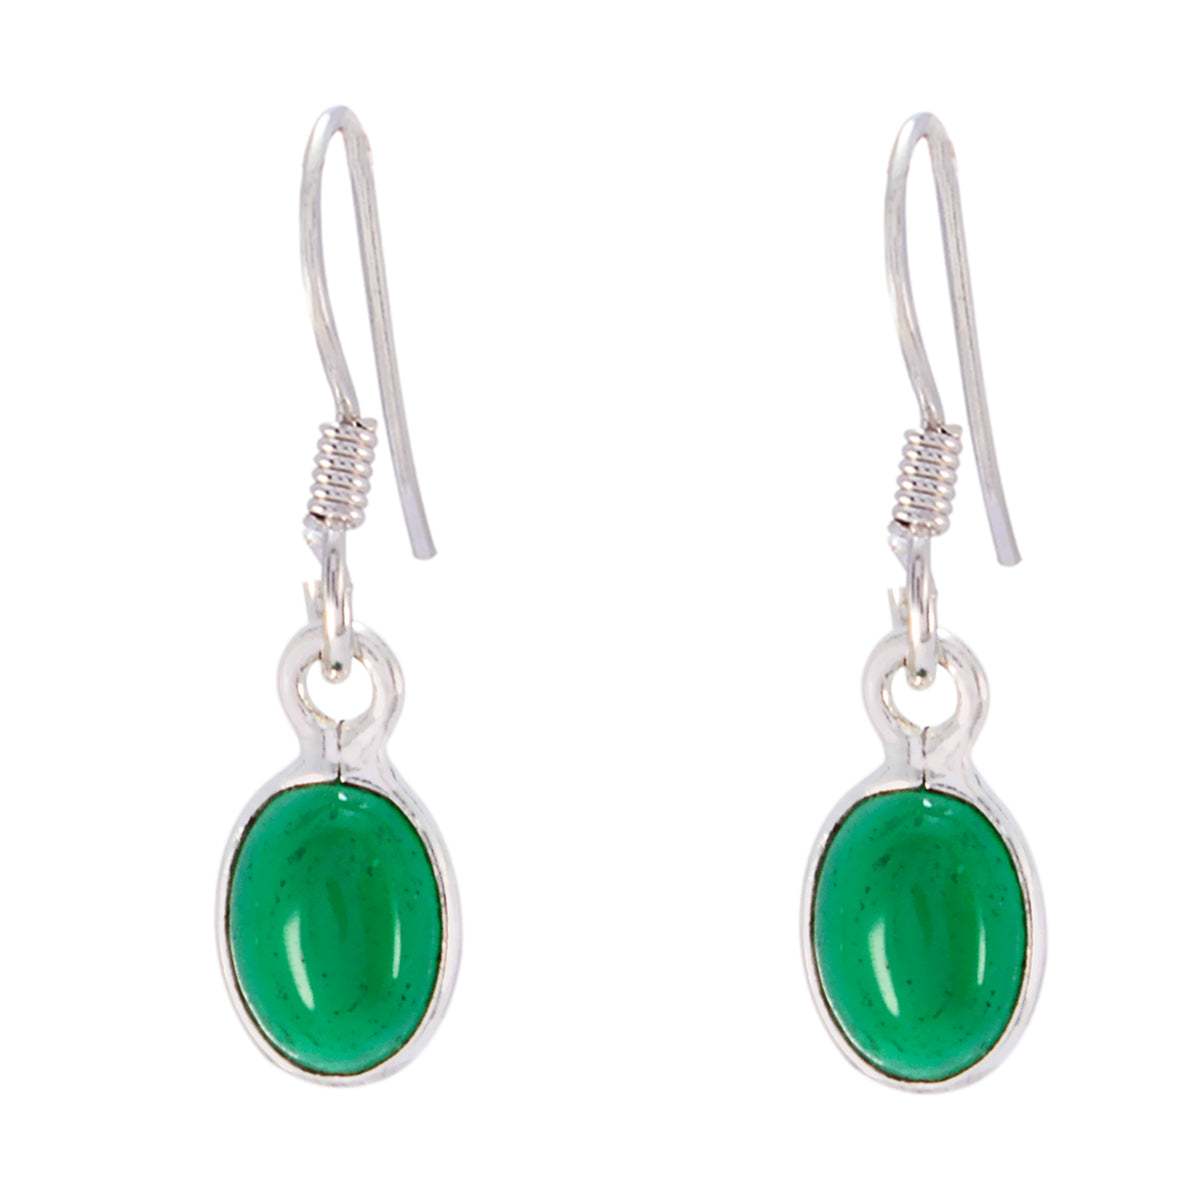 Riyo Good Gemstones oval Cabochon Green Onyx Silver Earring gift for anniversary